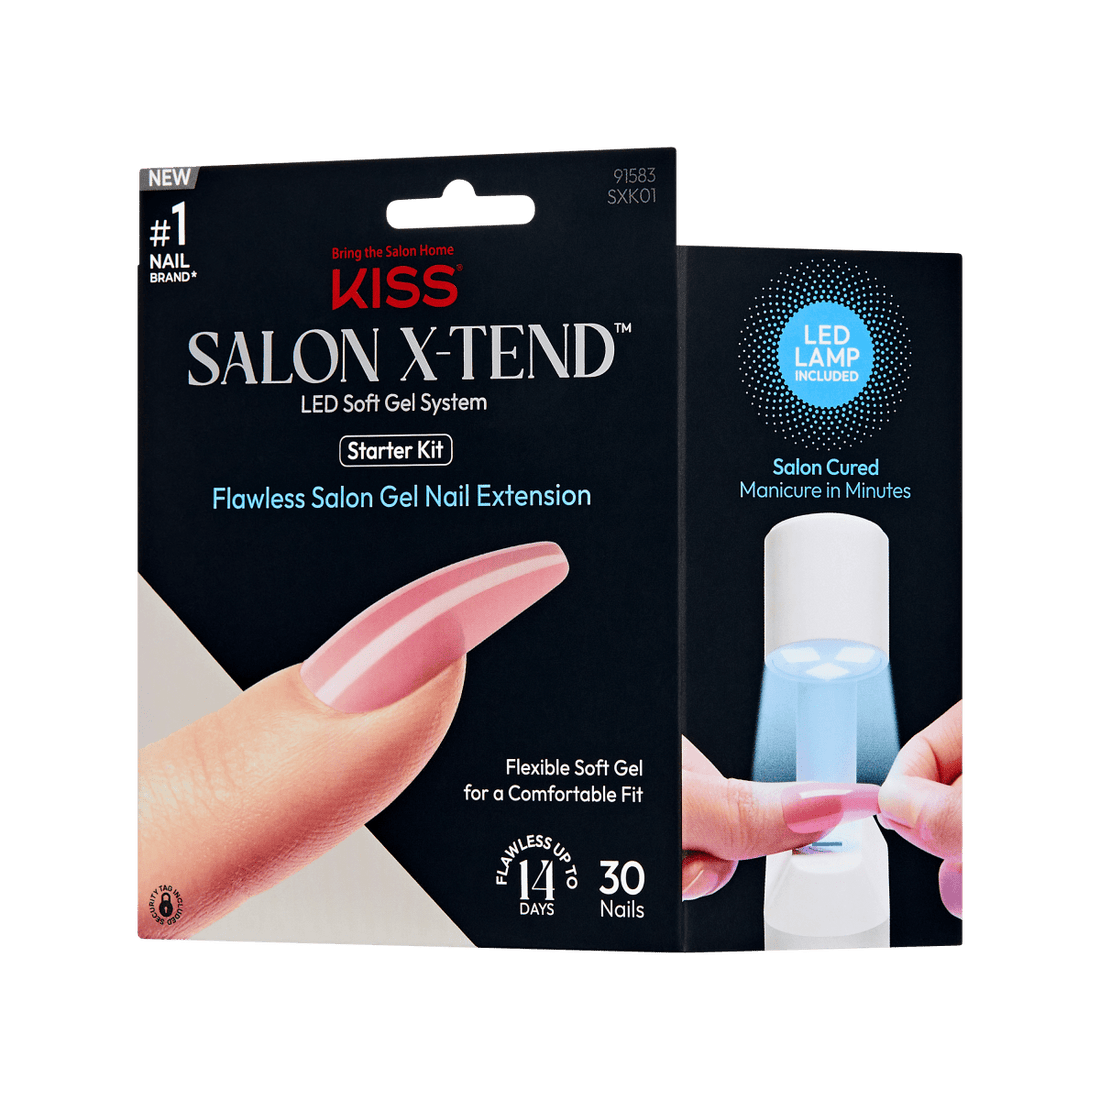 KISS Salon X-tend LED Soft Gel System - Tone